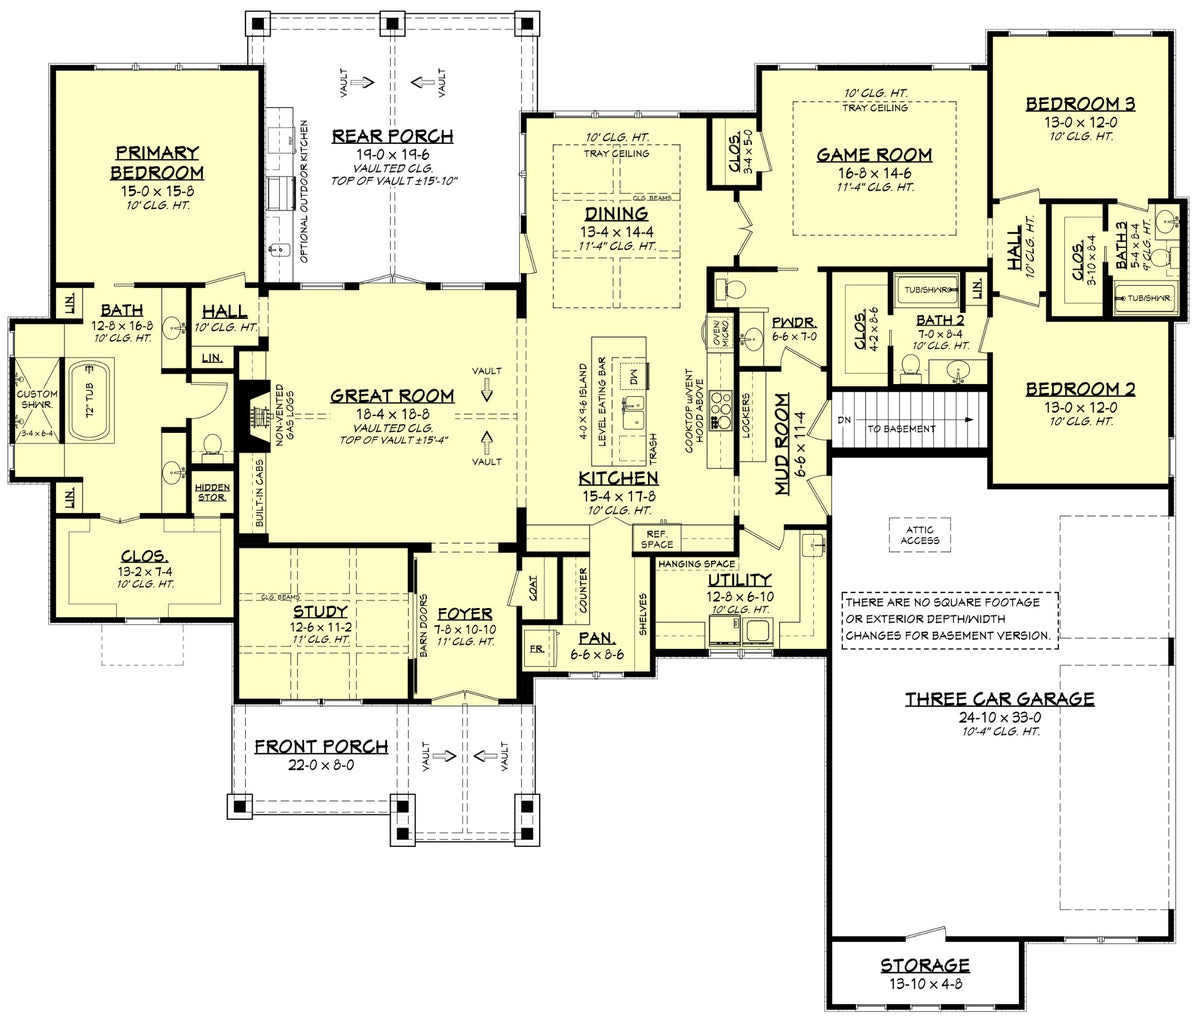 Odessa House - Basement Floor Plan